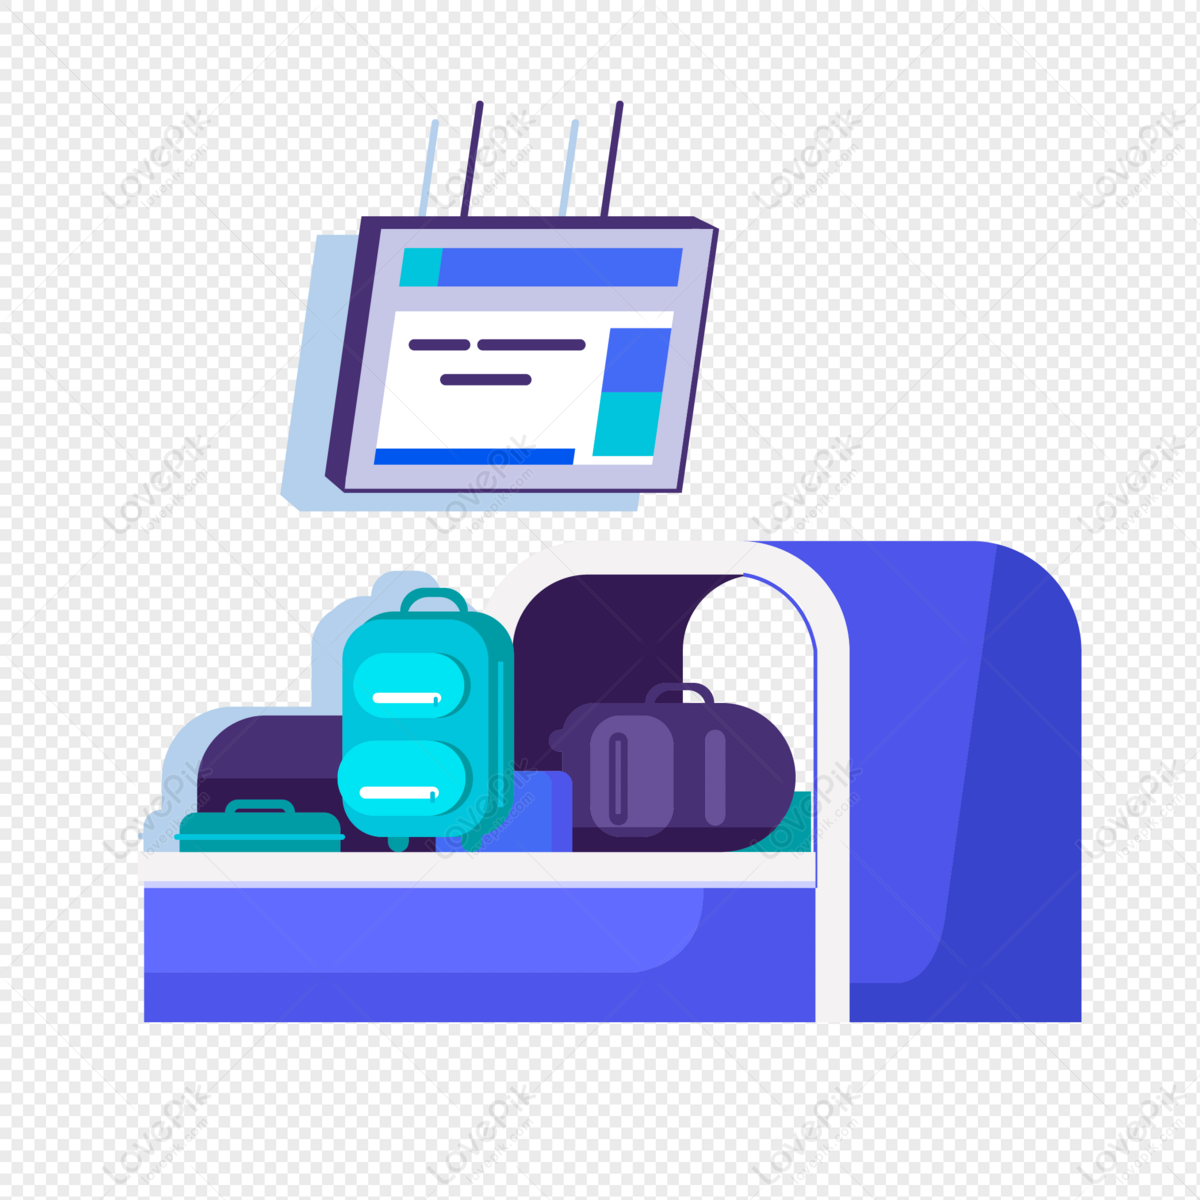 Airport baggage conveyor, purple suitcase, icon suitcase, suitcase vector png image